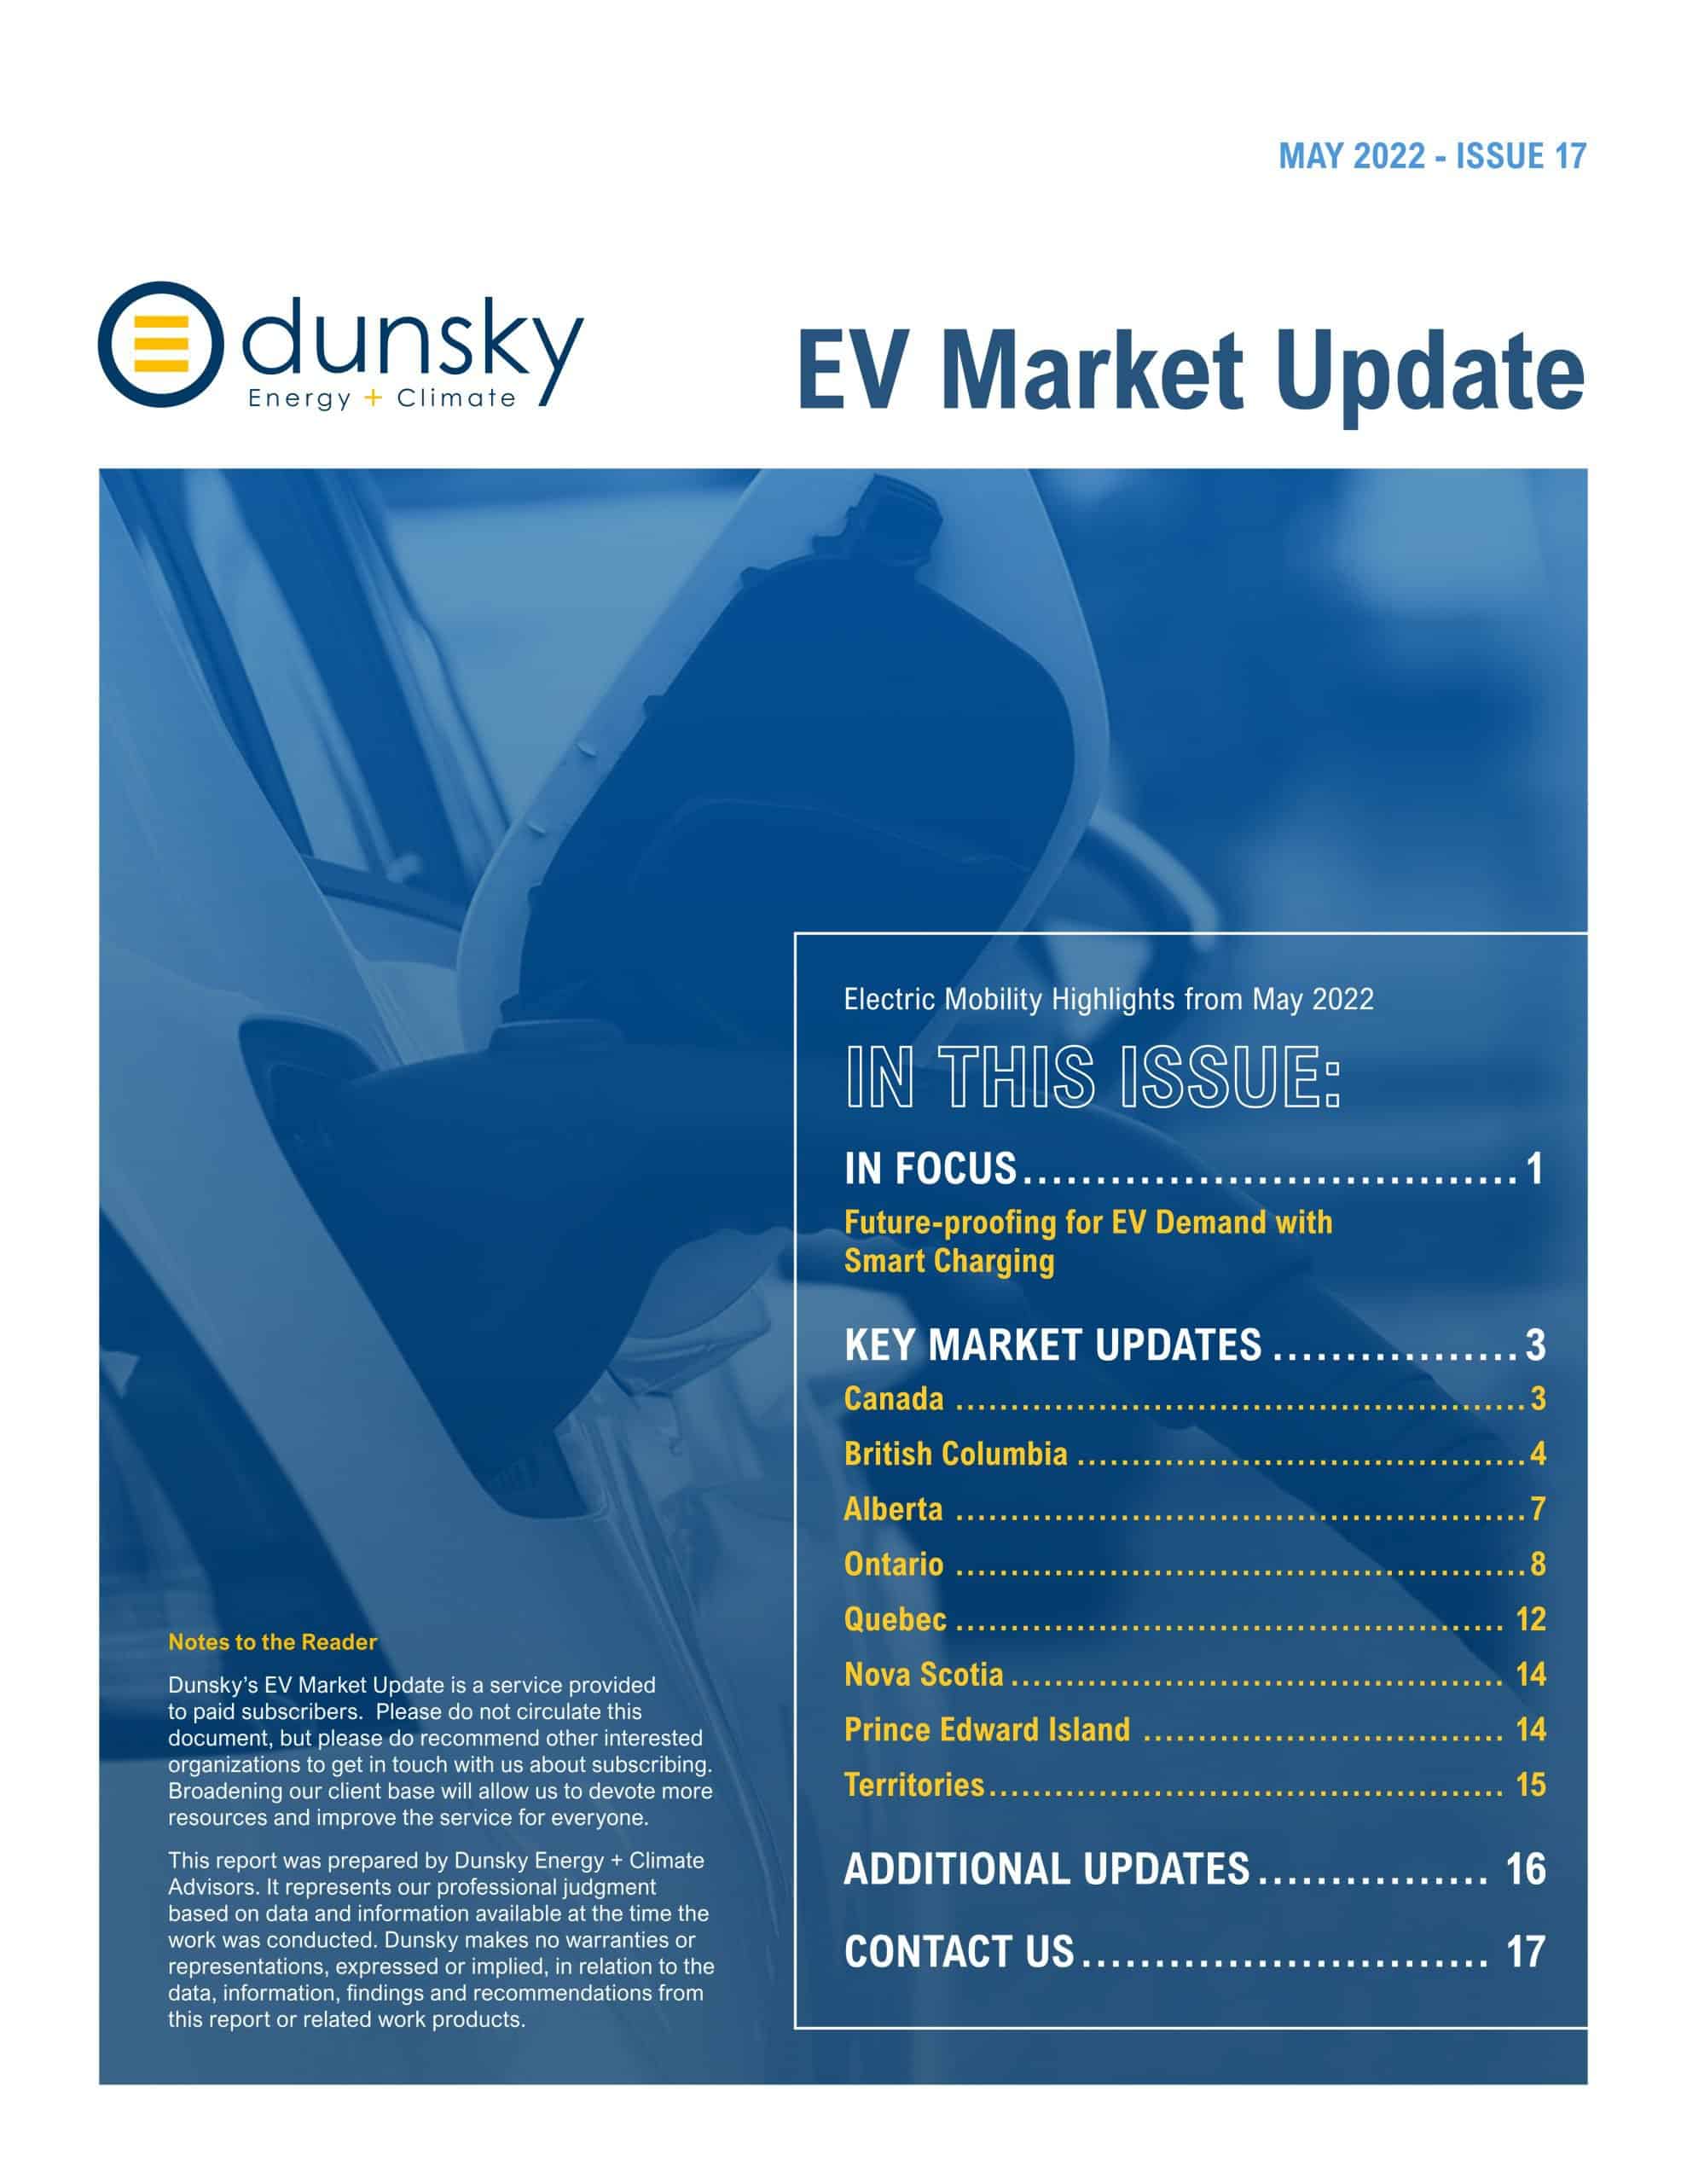 Dunsky Canadian EV Market Update Issue 17 - May 2022